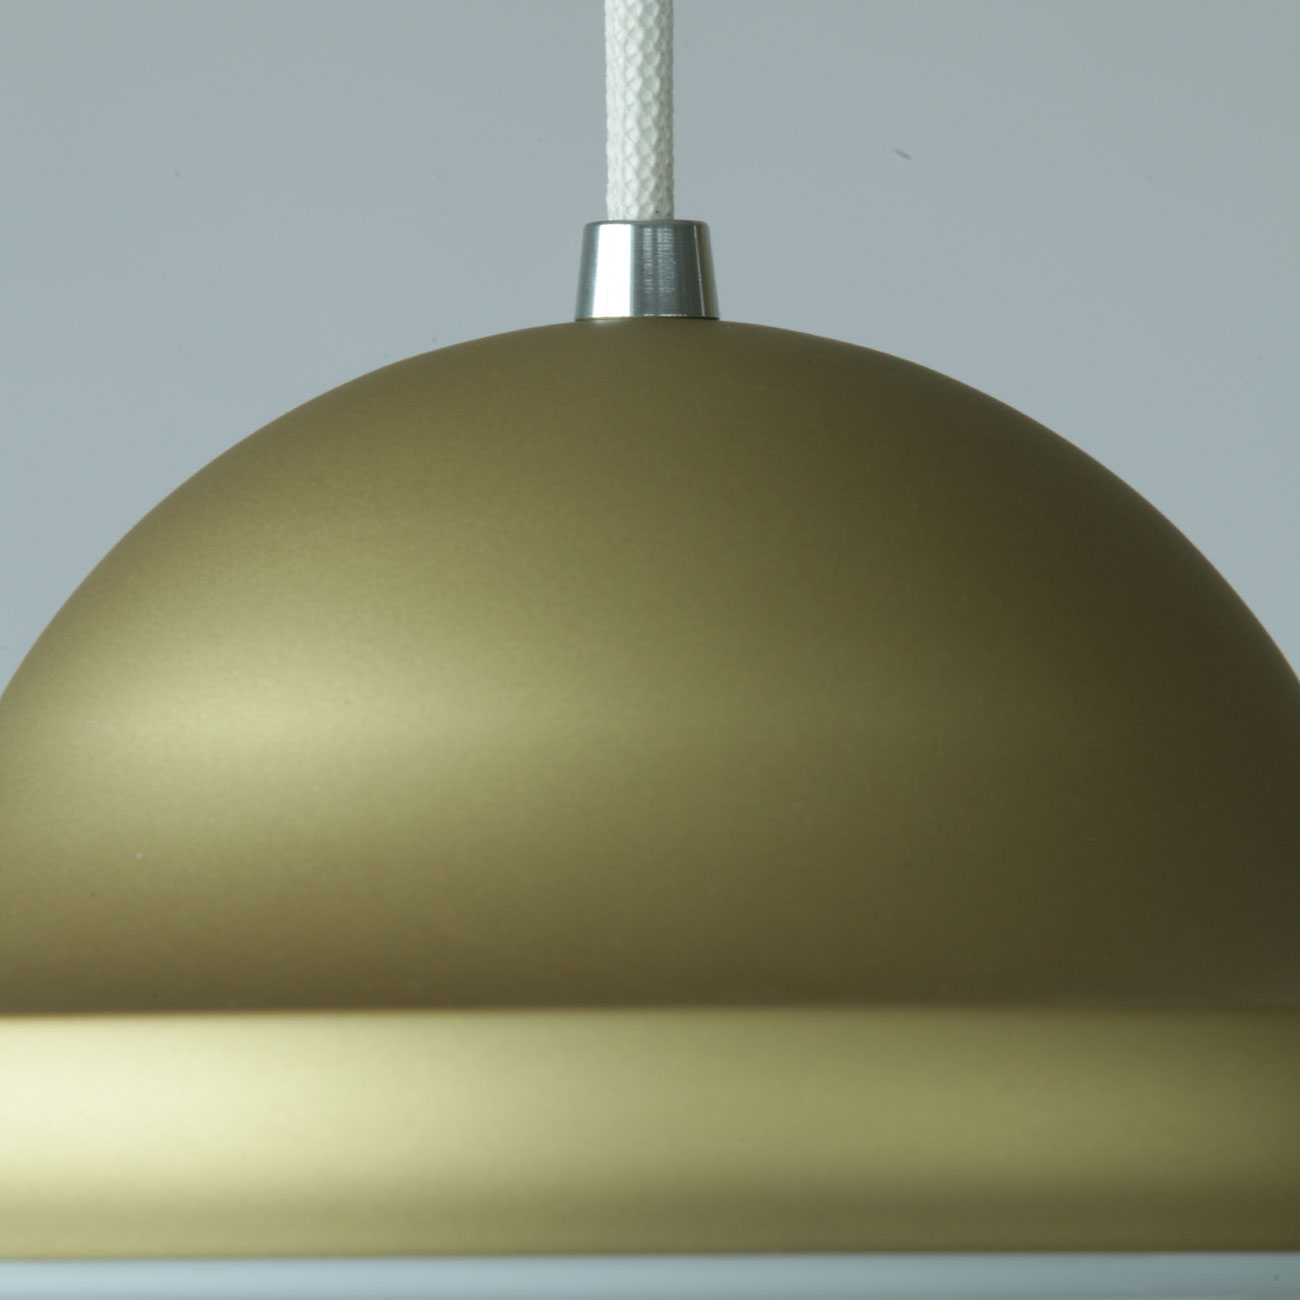 BUBI Leuchten-Designklassiker von Henning Koppel: matt golden lackiert